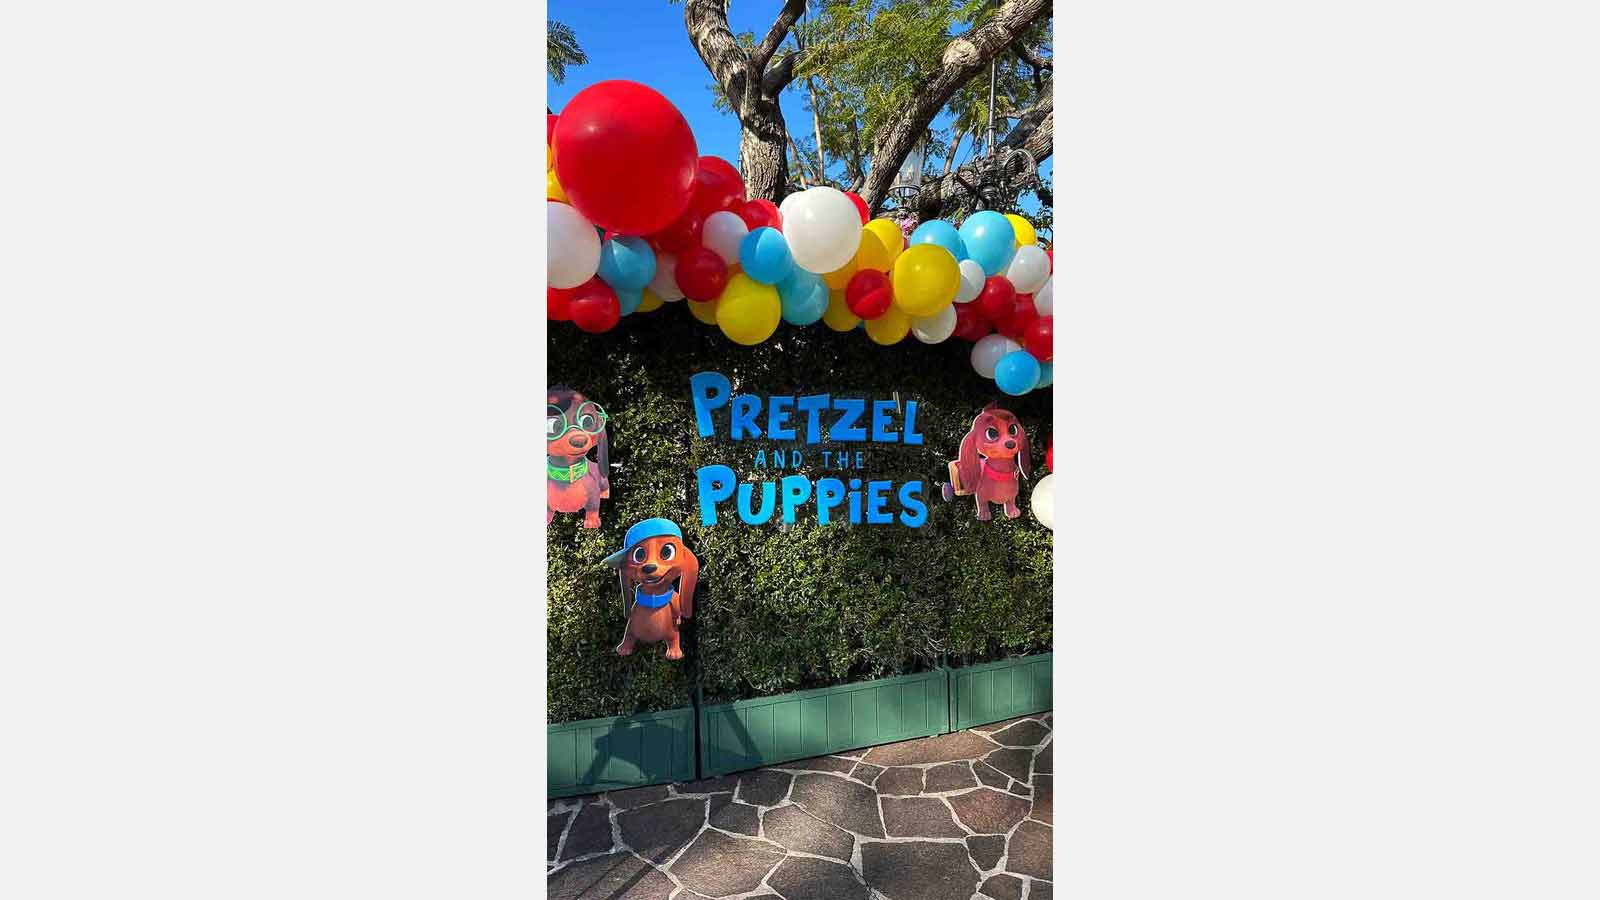 pretzel and the puppies event sign